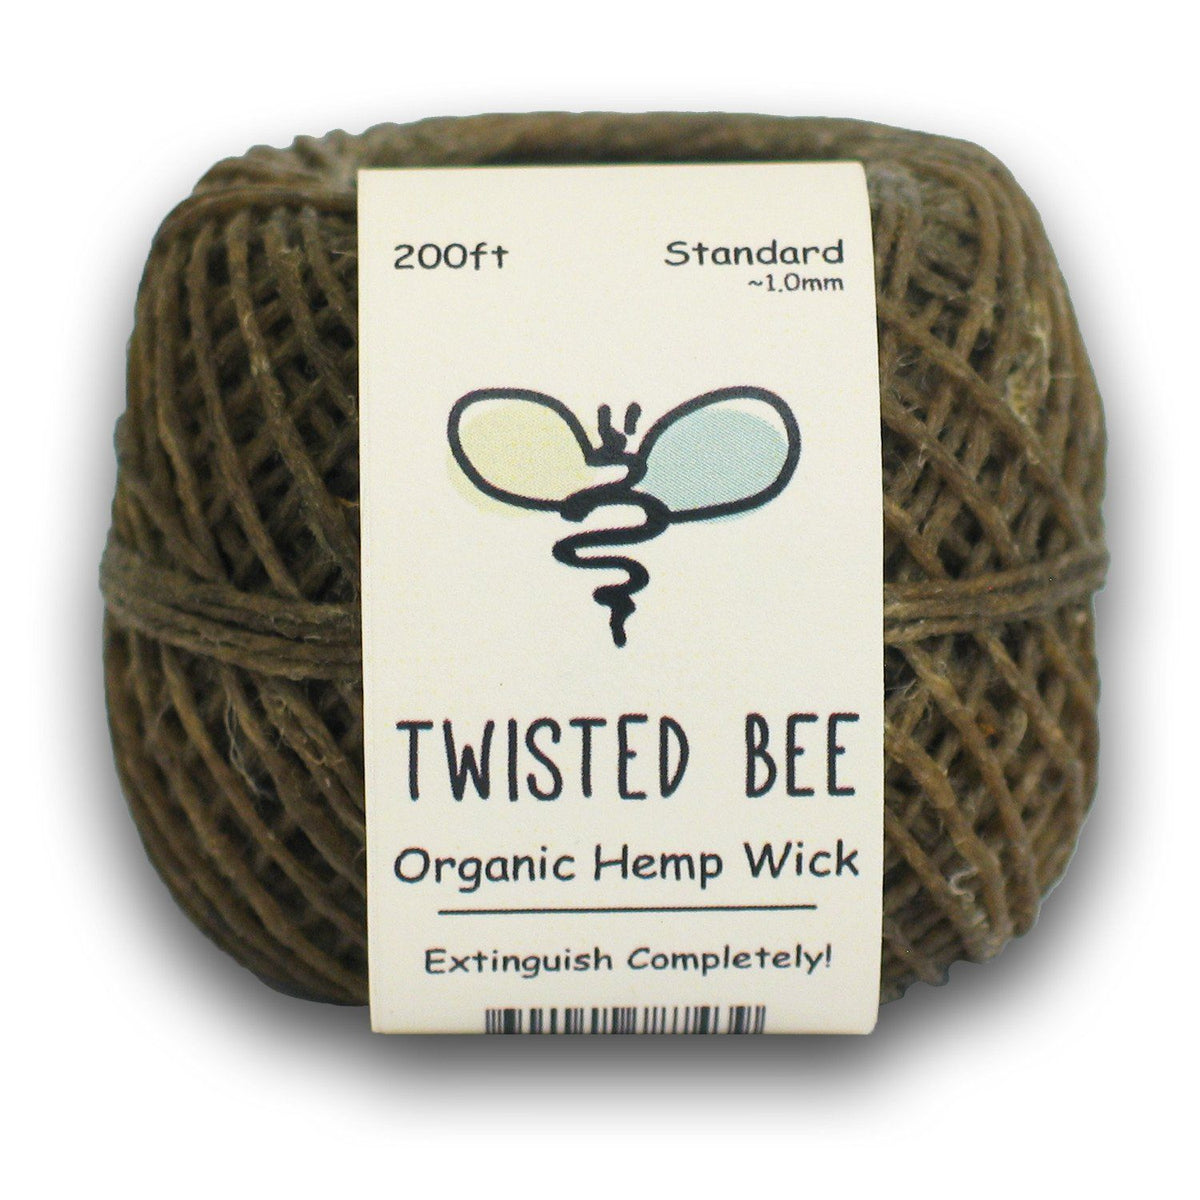 100% Organic Hemp Wick with Natural Beeswax Coating, Twisted Bee (200f